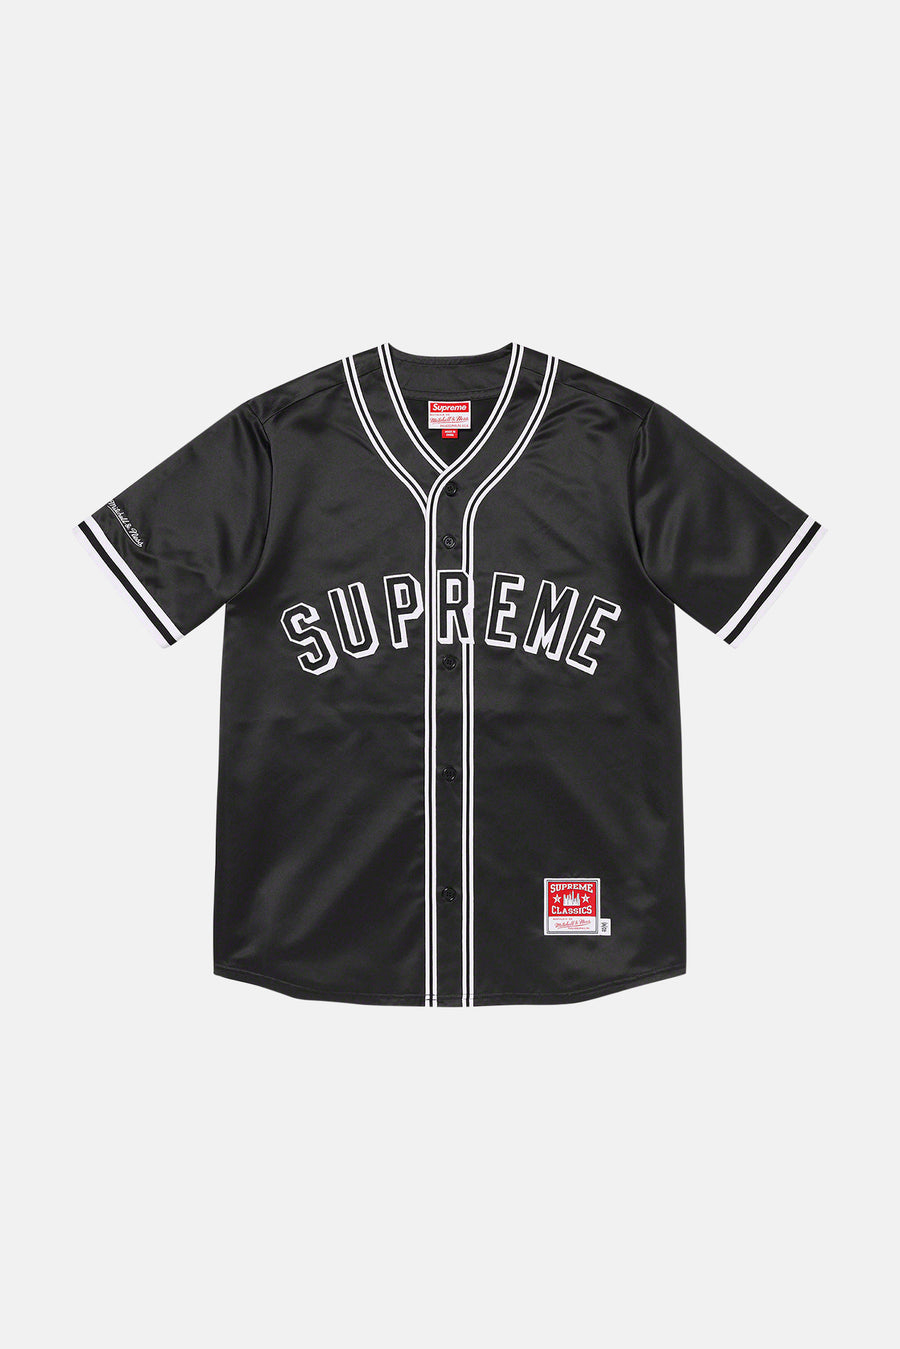 Supreme satin jersey reveal 